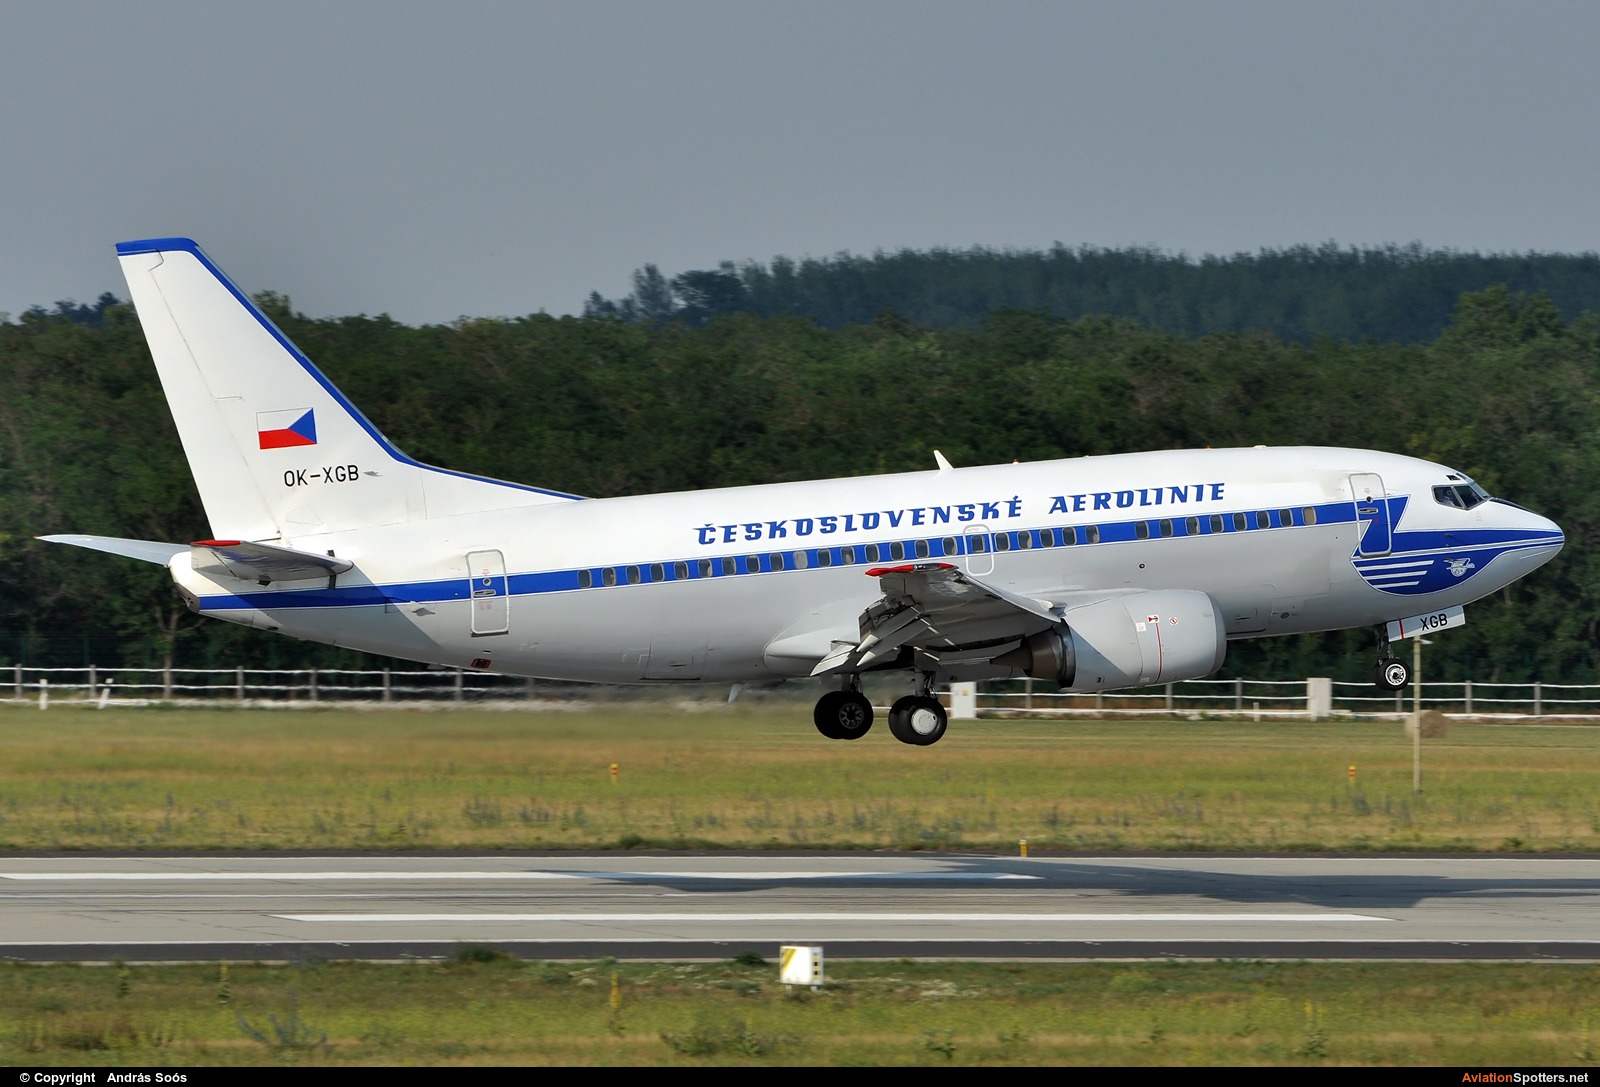 CSA - Czech Airlines  -  737-500  (OK-XGB) By András Soós (sas1965)